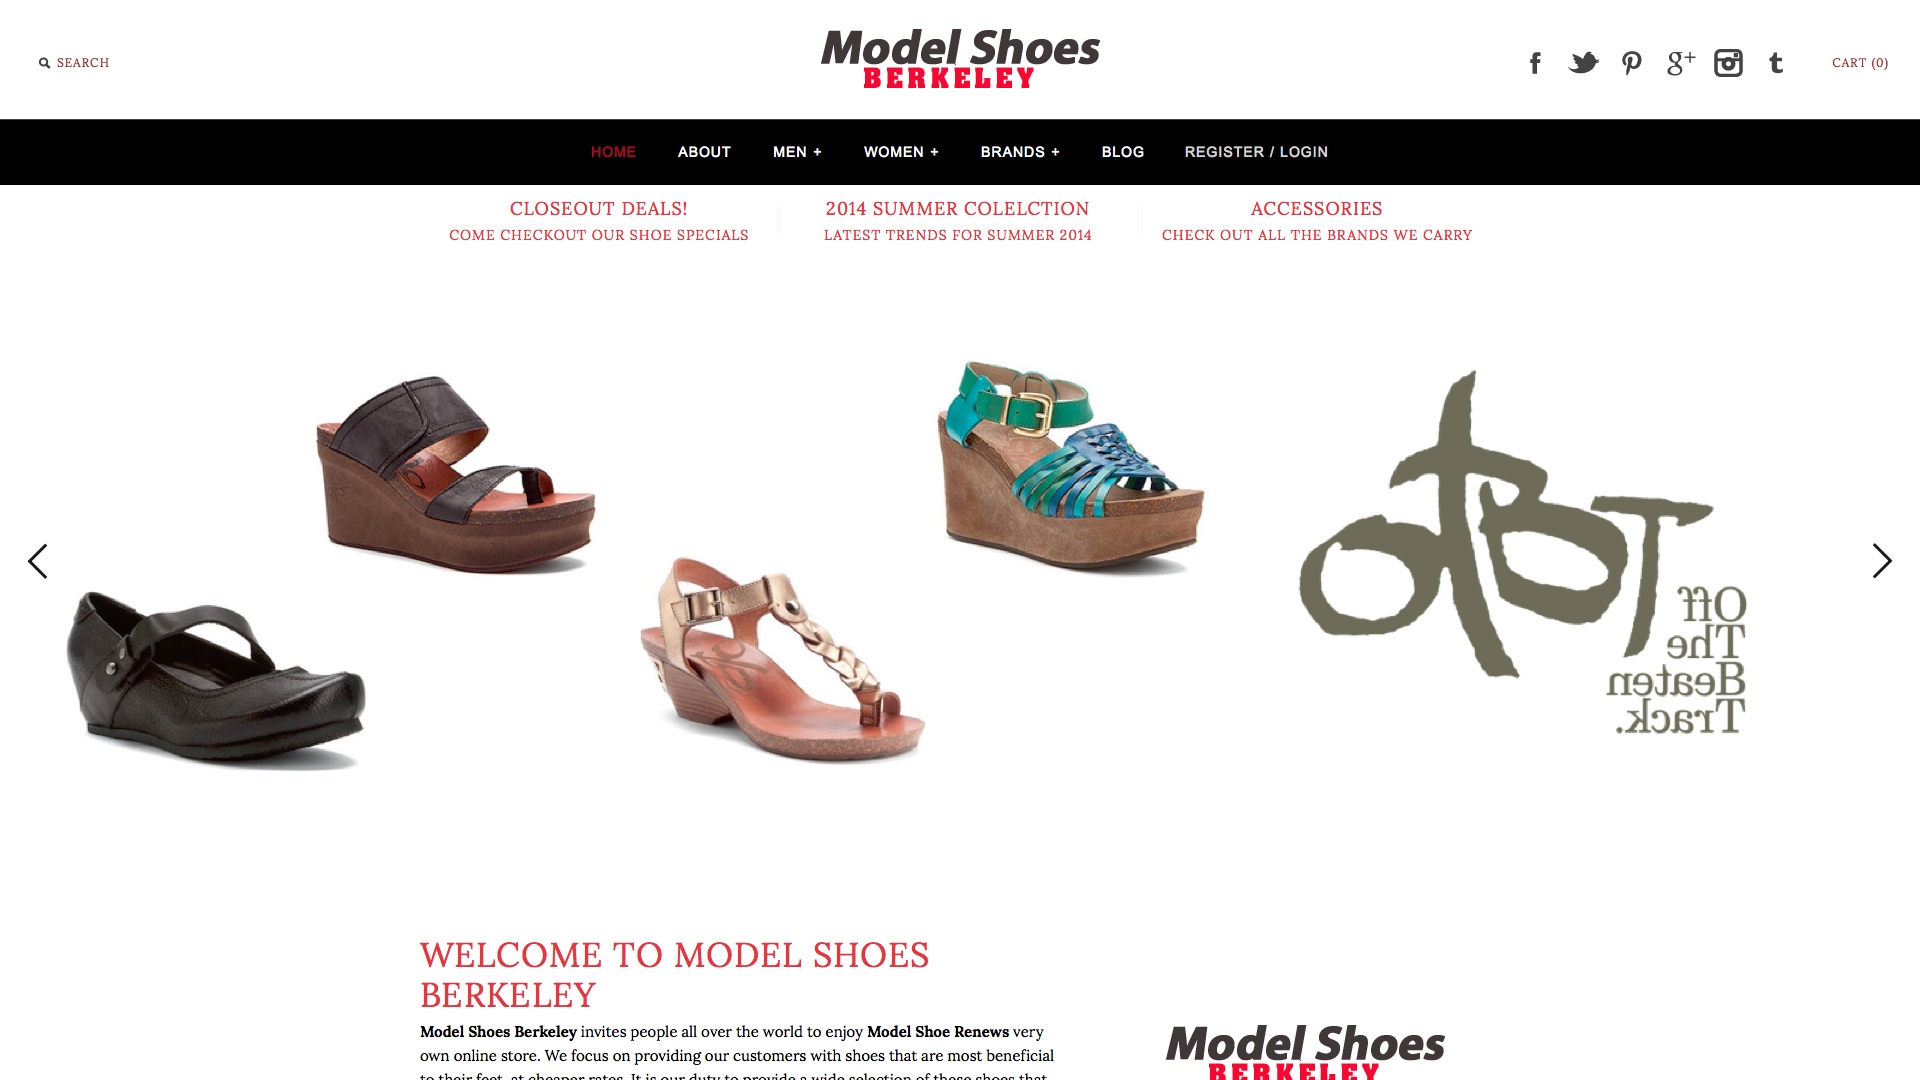 wordpress experts WordPress Experts Model Shoes Berkeley Web Designers in San Francisco Jumpyr 00 Studios